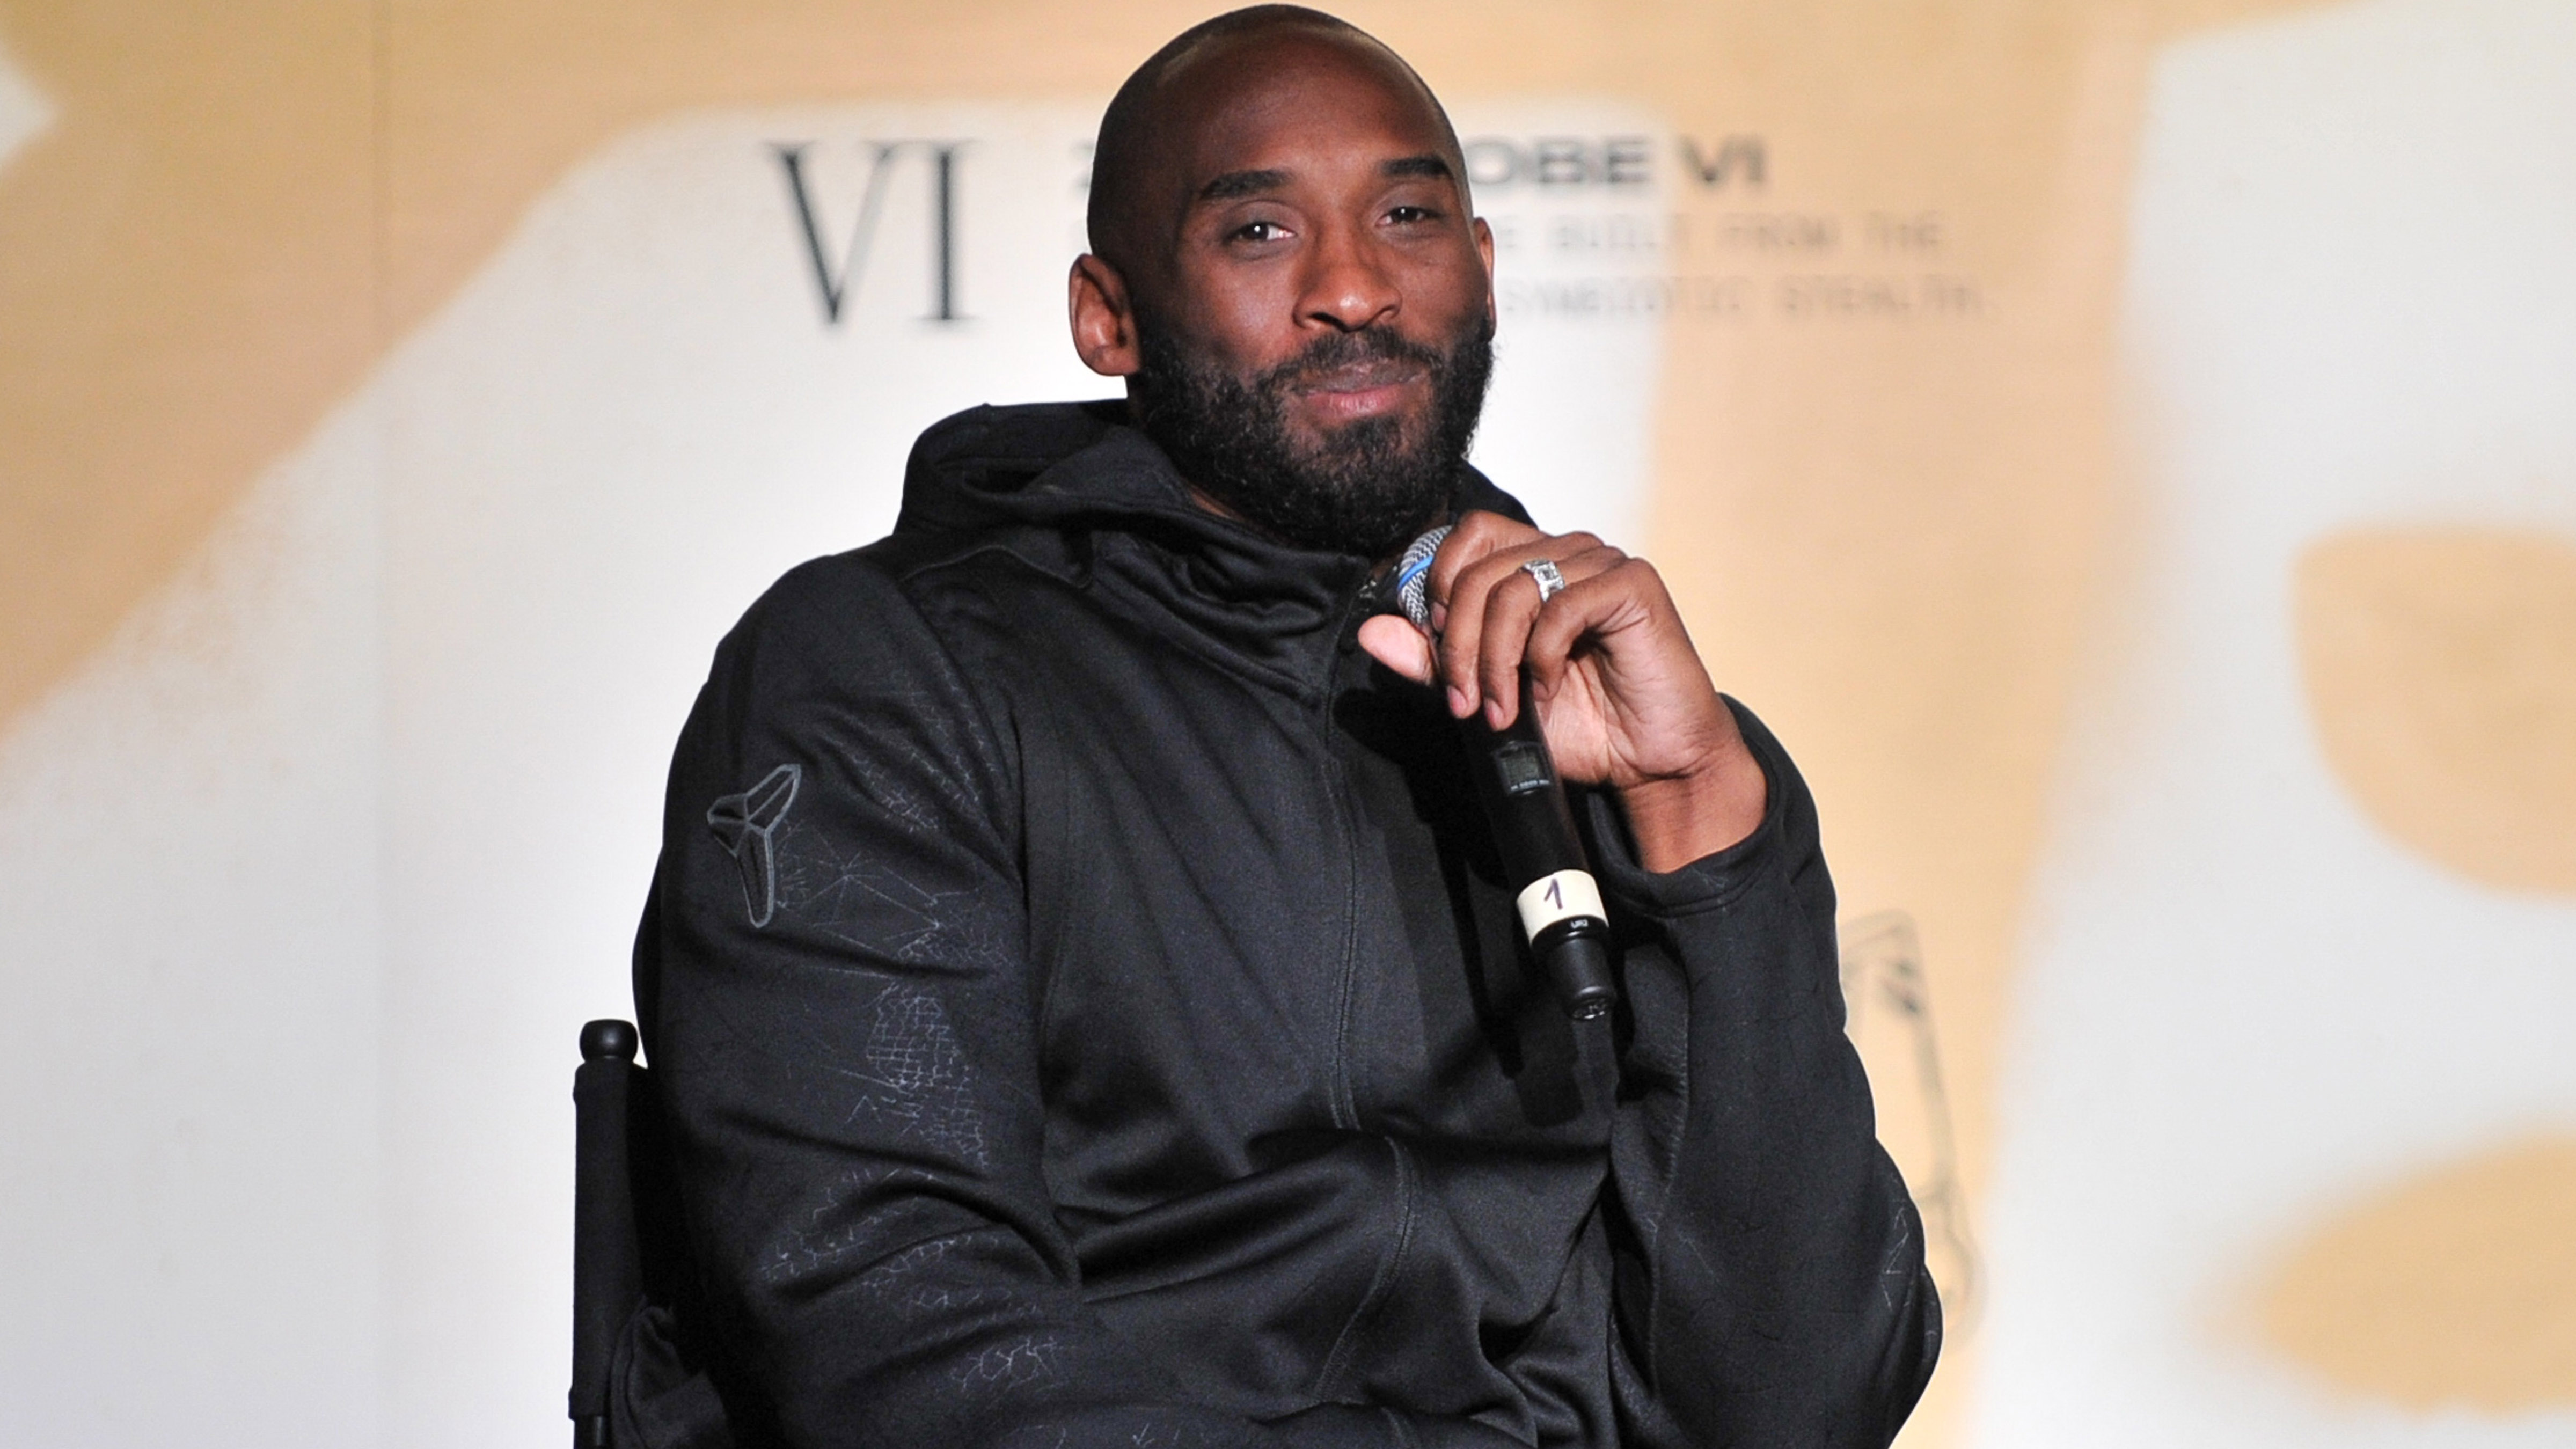 Watch: Kobe Bryant honored by Nike at New York Fashion Week - Deseret News